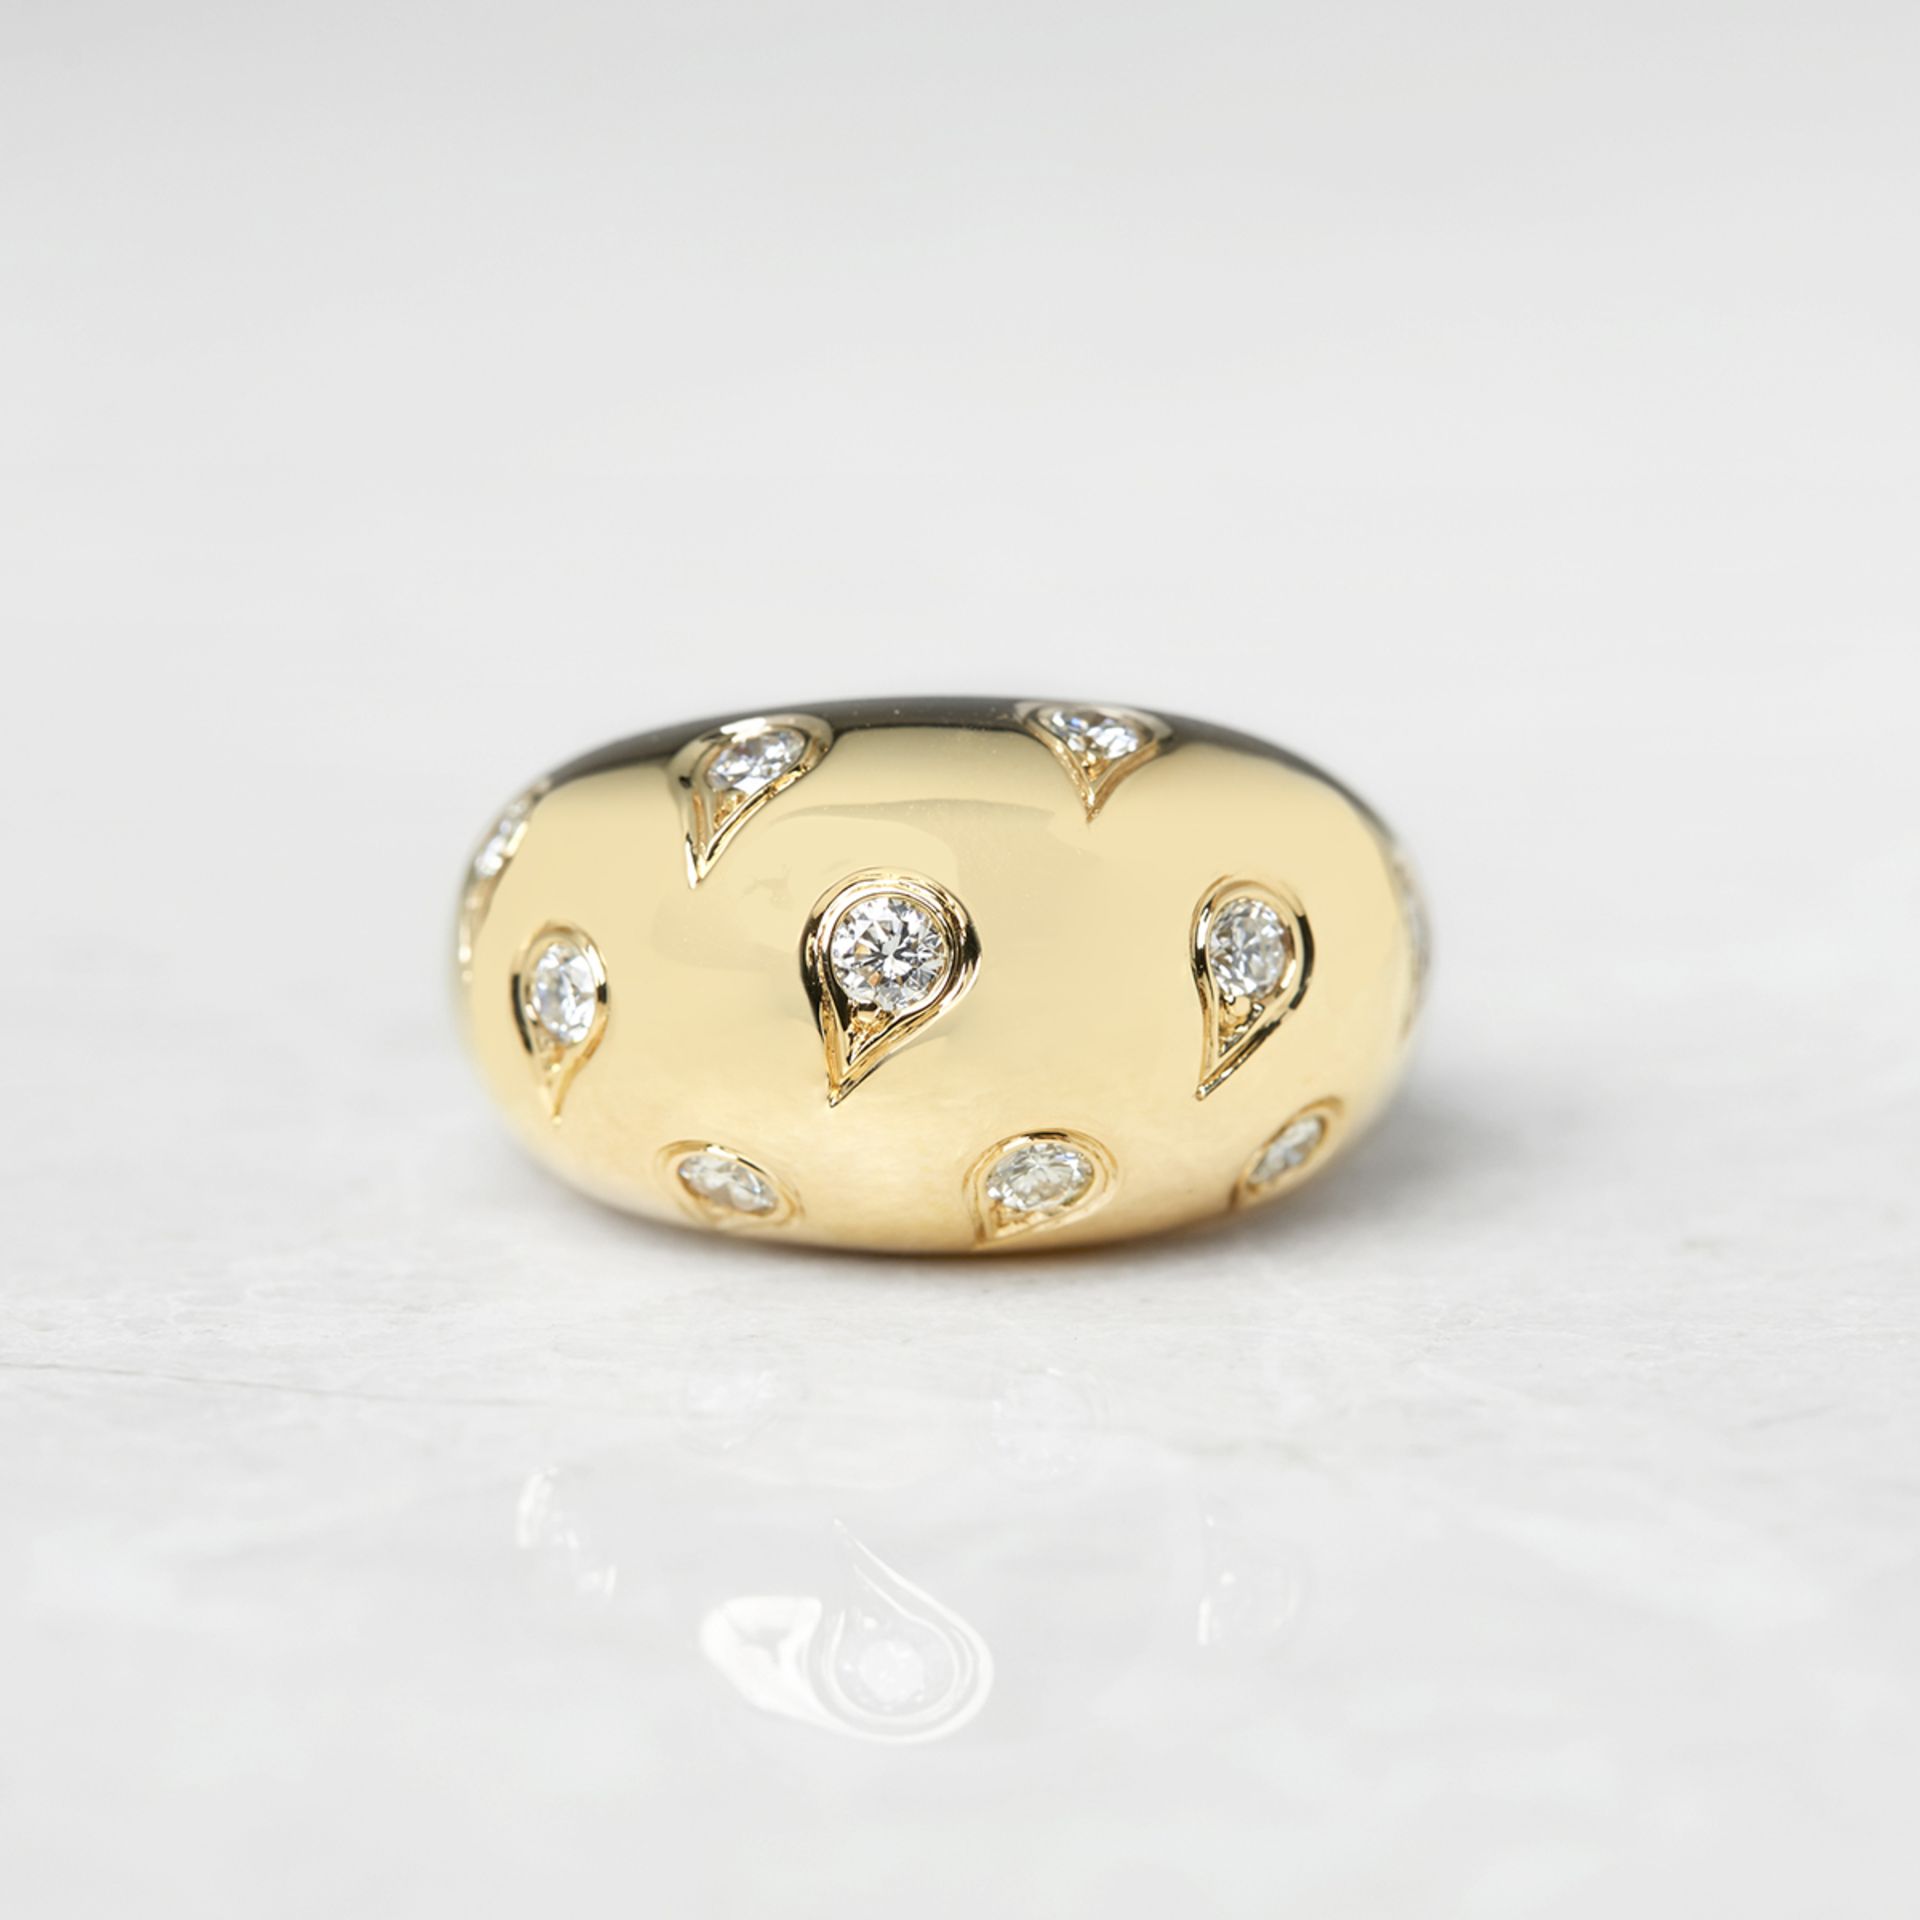 Cartier 18k Yellow Gold 1.00ct Diamond Bombe Ring - Image 2 of 7